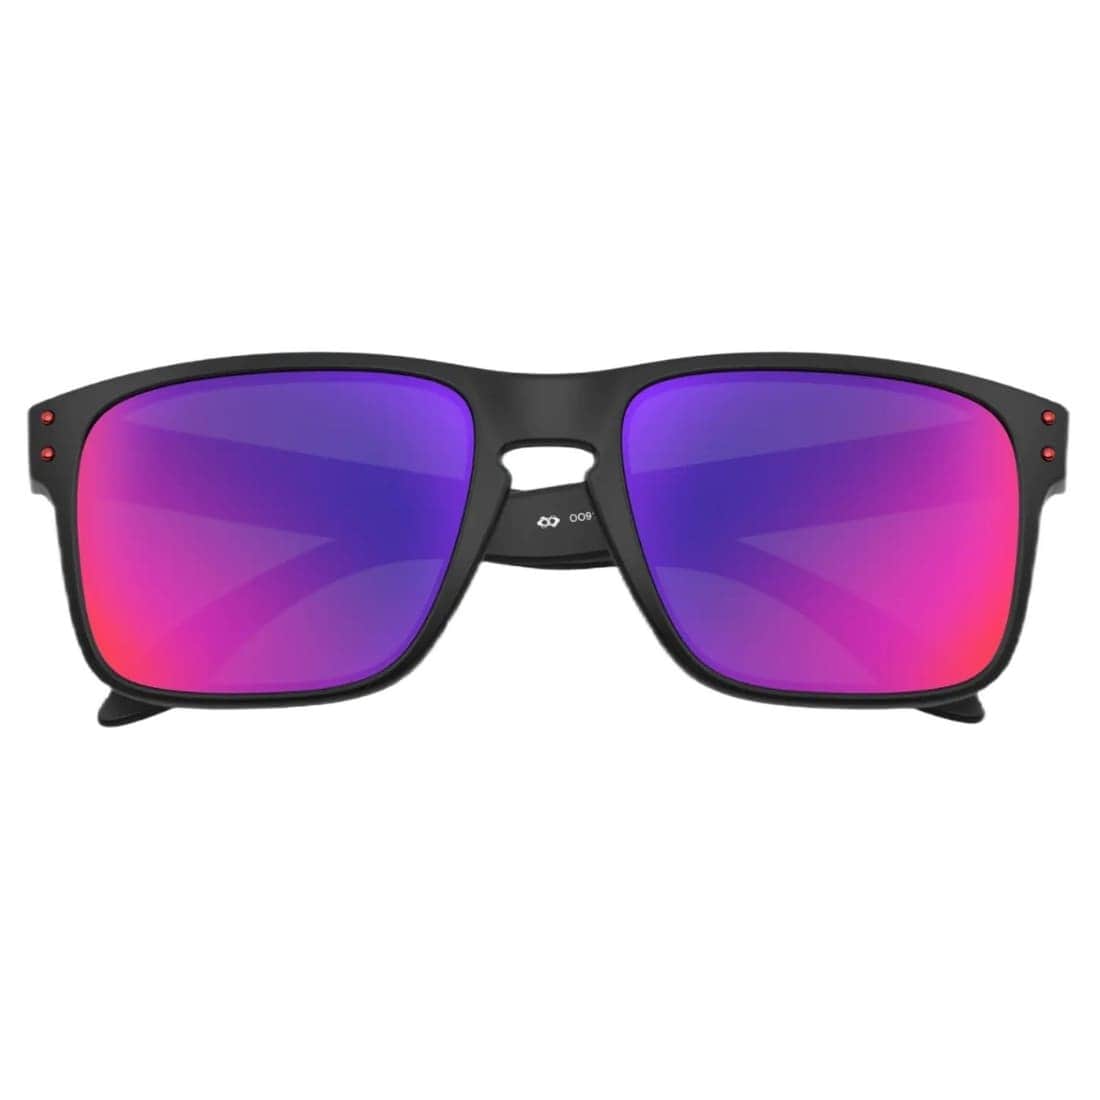 Valve® + Red Iridium Lenses, Polished Black Frame Sunglasses | Oakley® US